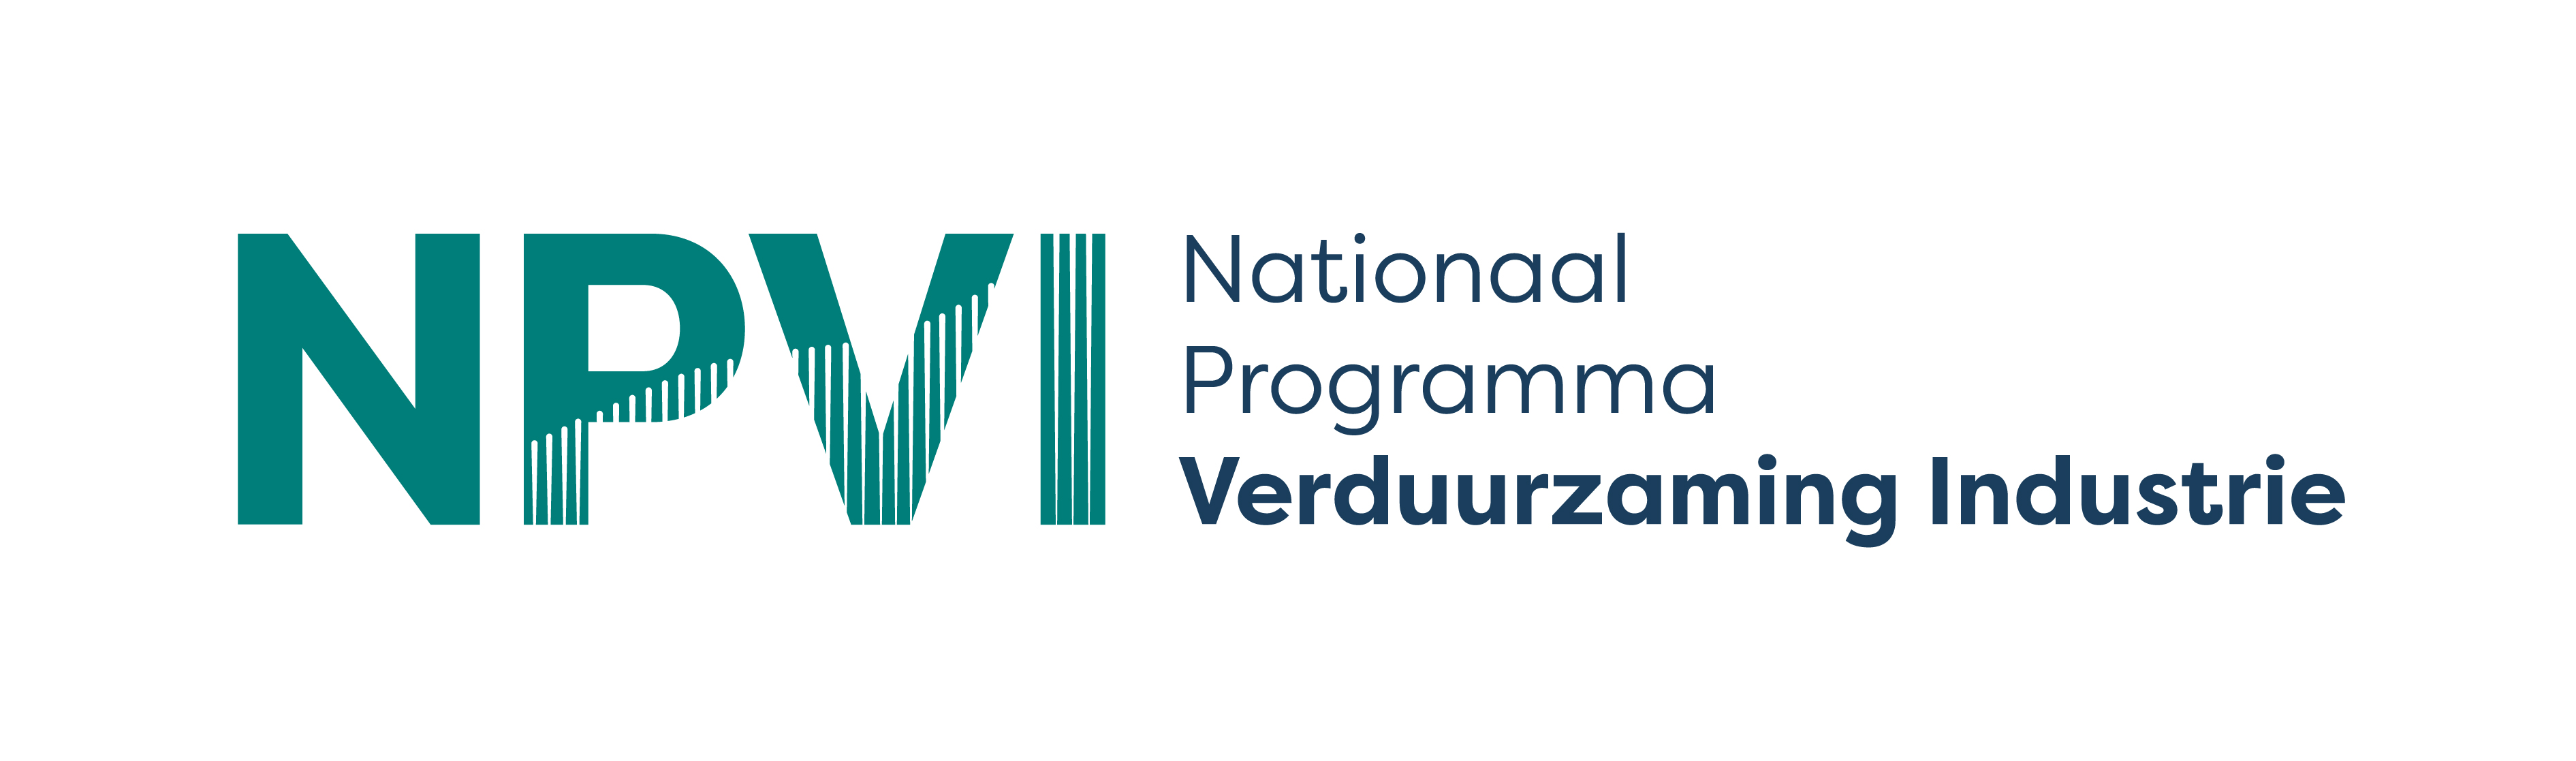 Nationaal Programma Verduurzaming Industrie logo